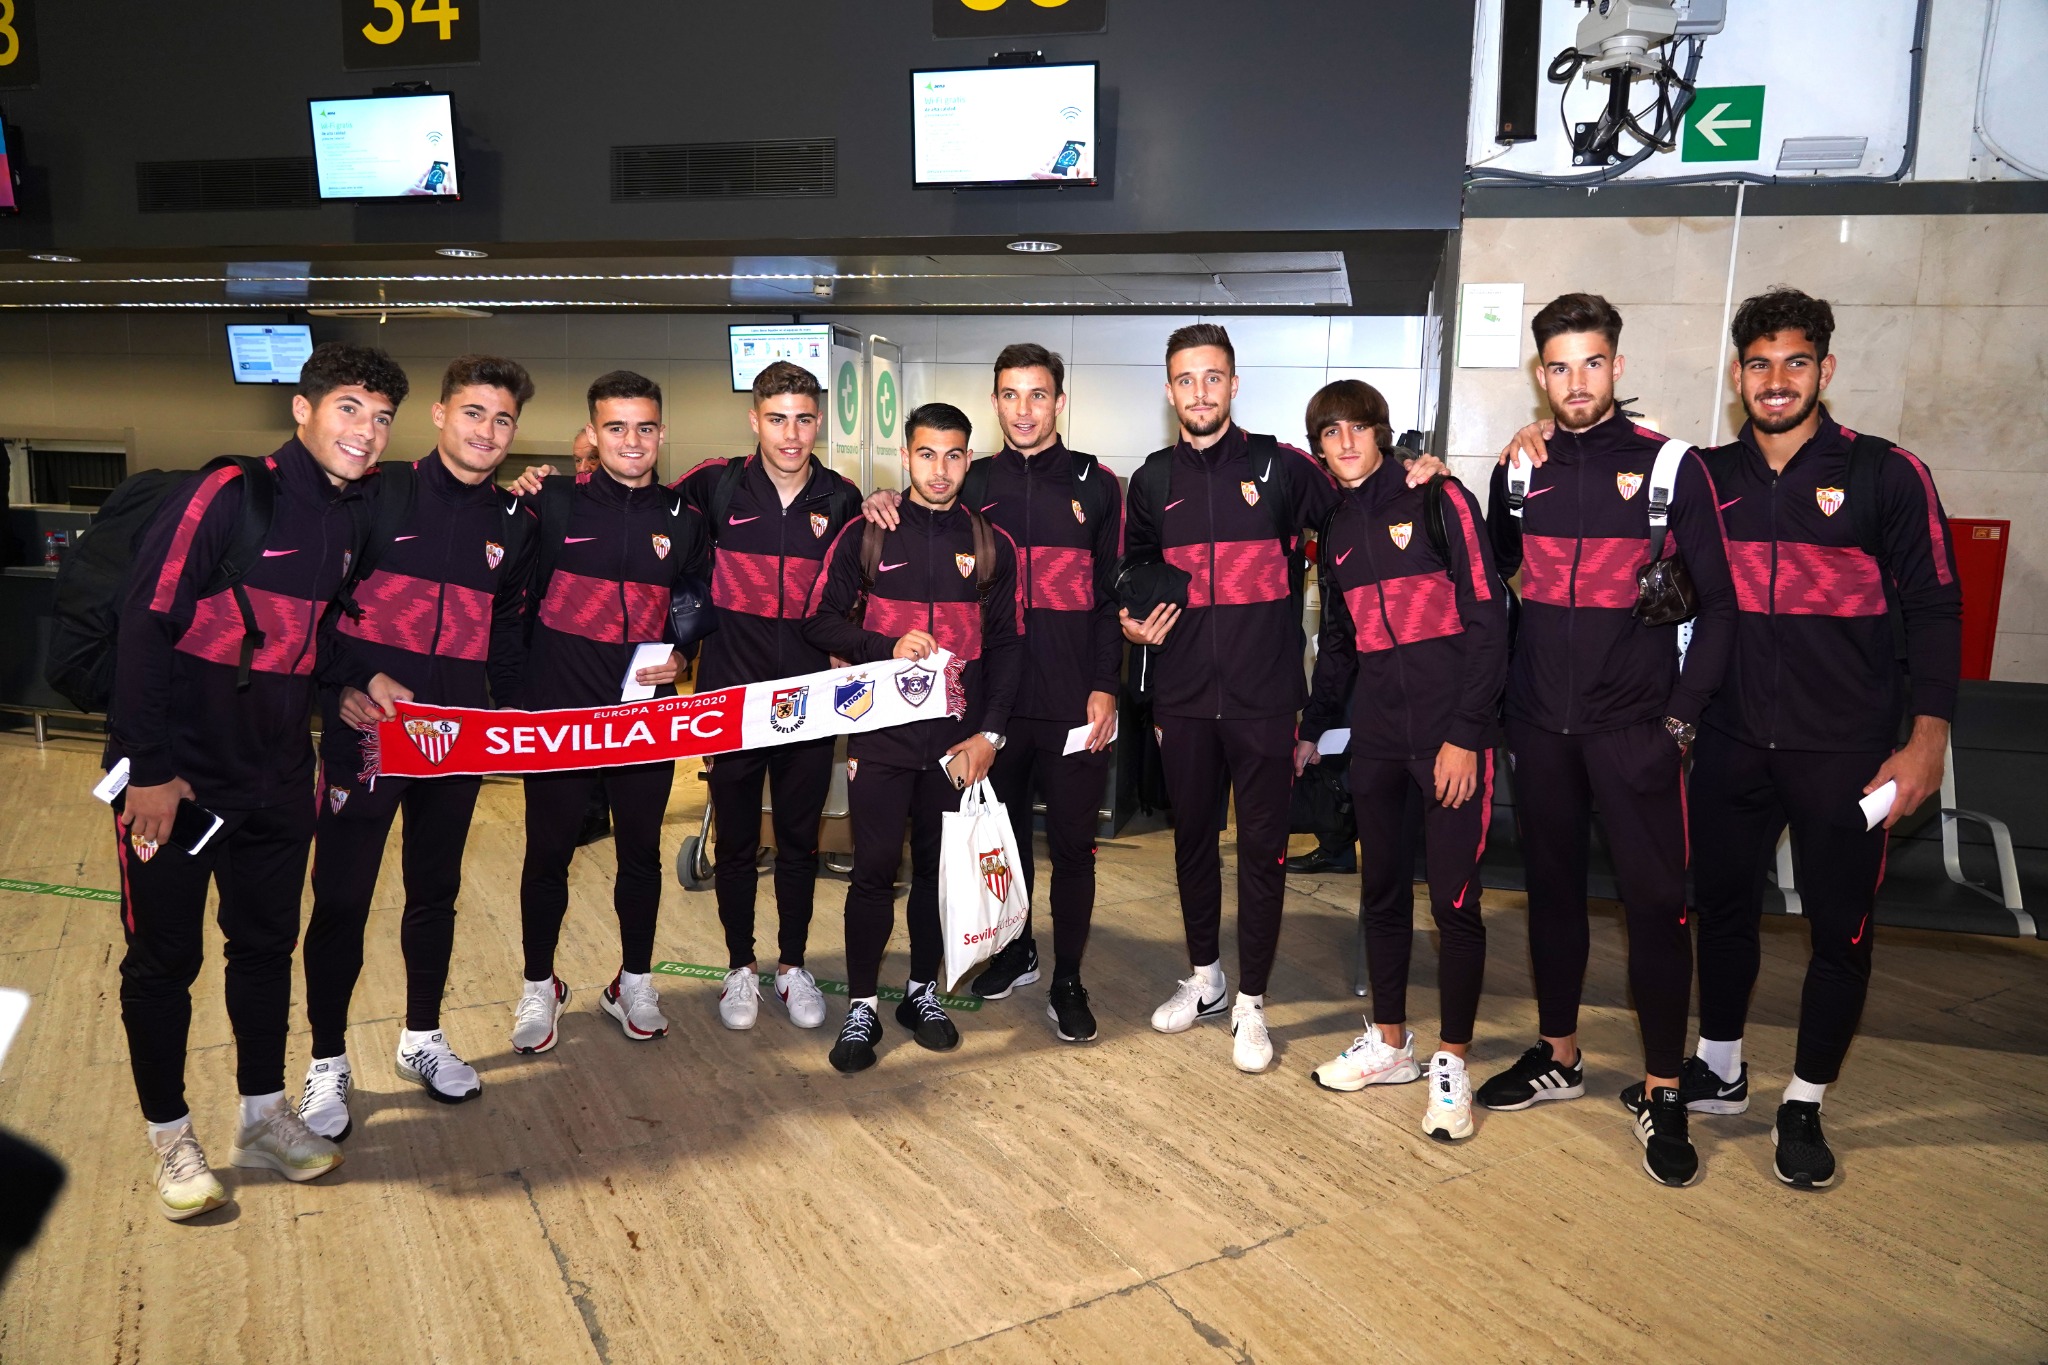 تويتر \ Sevilla Fútbol Club على تويتر: "Expedición repleta de @CanteraSFC parte hacia estrenando chándal. 🔝👌😍 ¡Buen viaje, equipo! ✈✈ #WeareSevilla #VamosmiSevilla #UEL https://t.co/maNBNRuYDo"